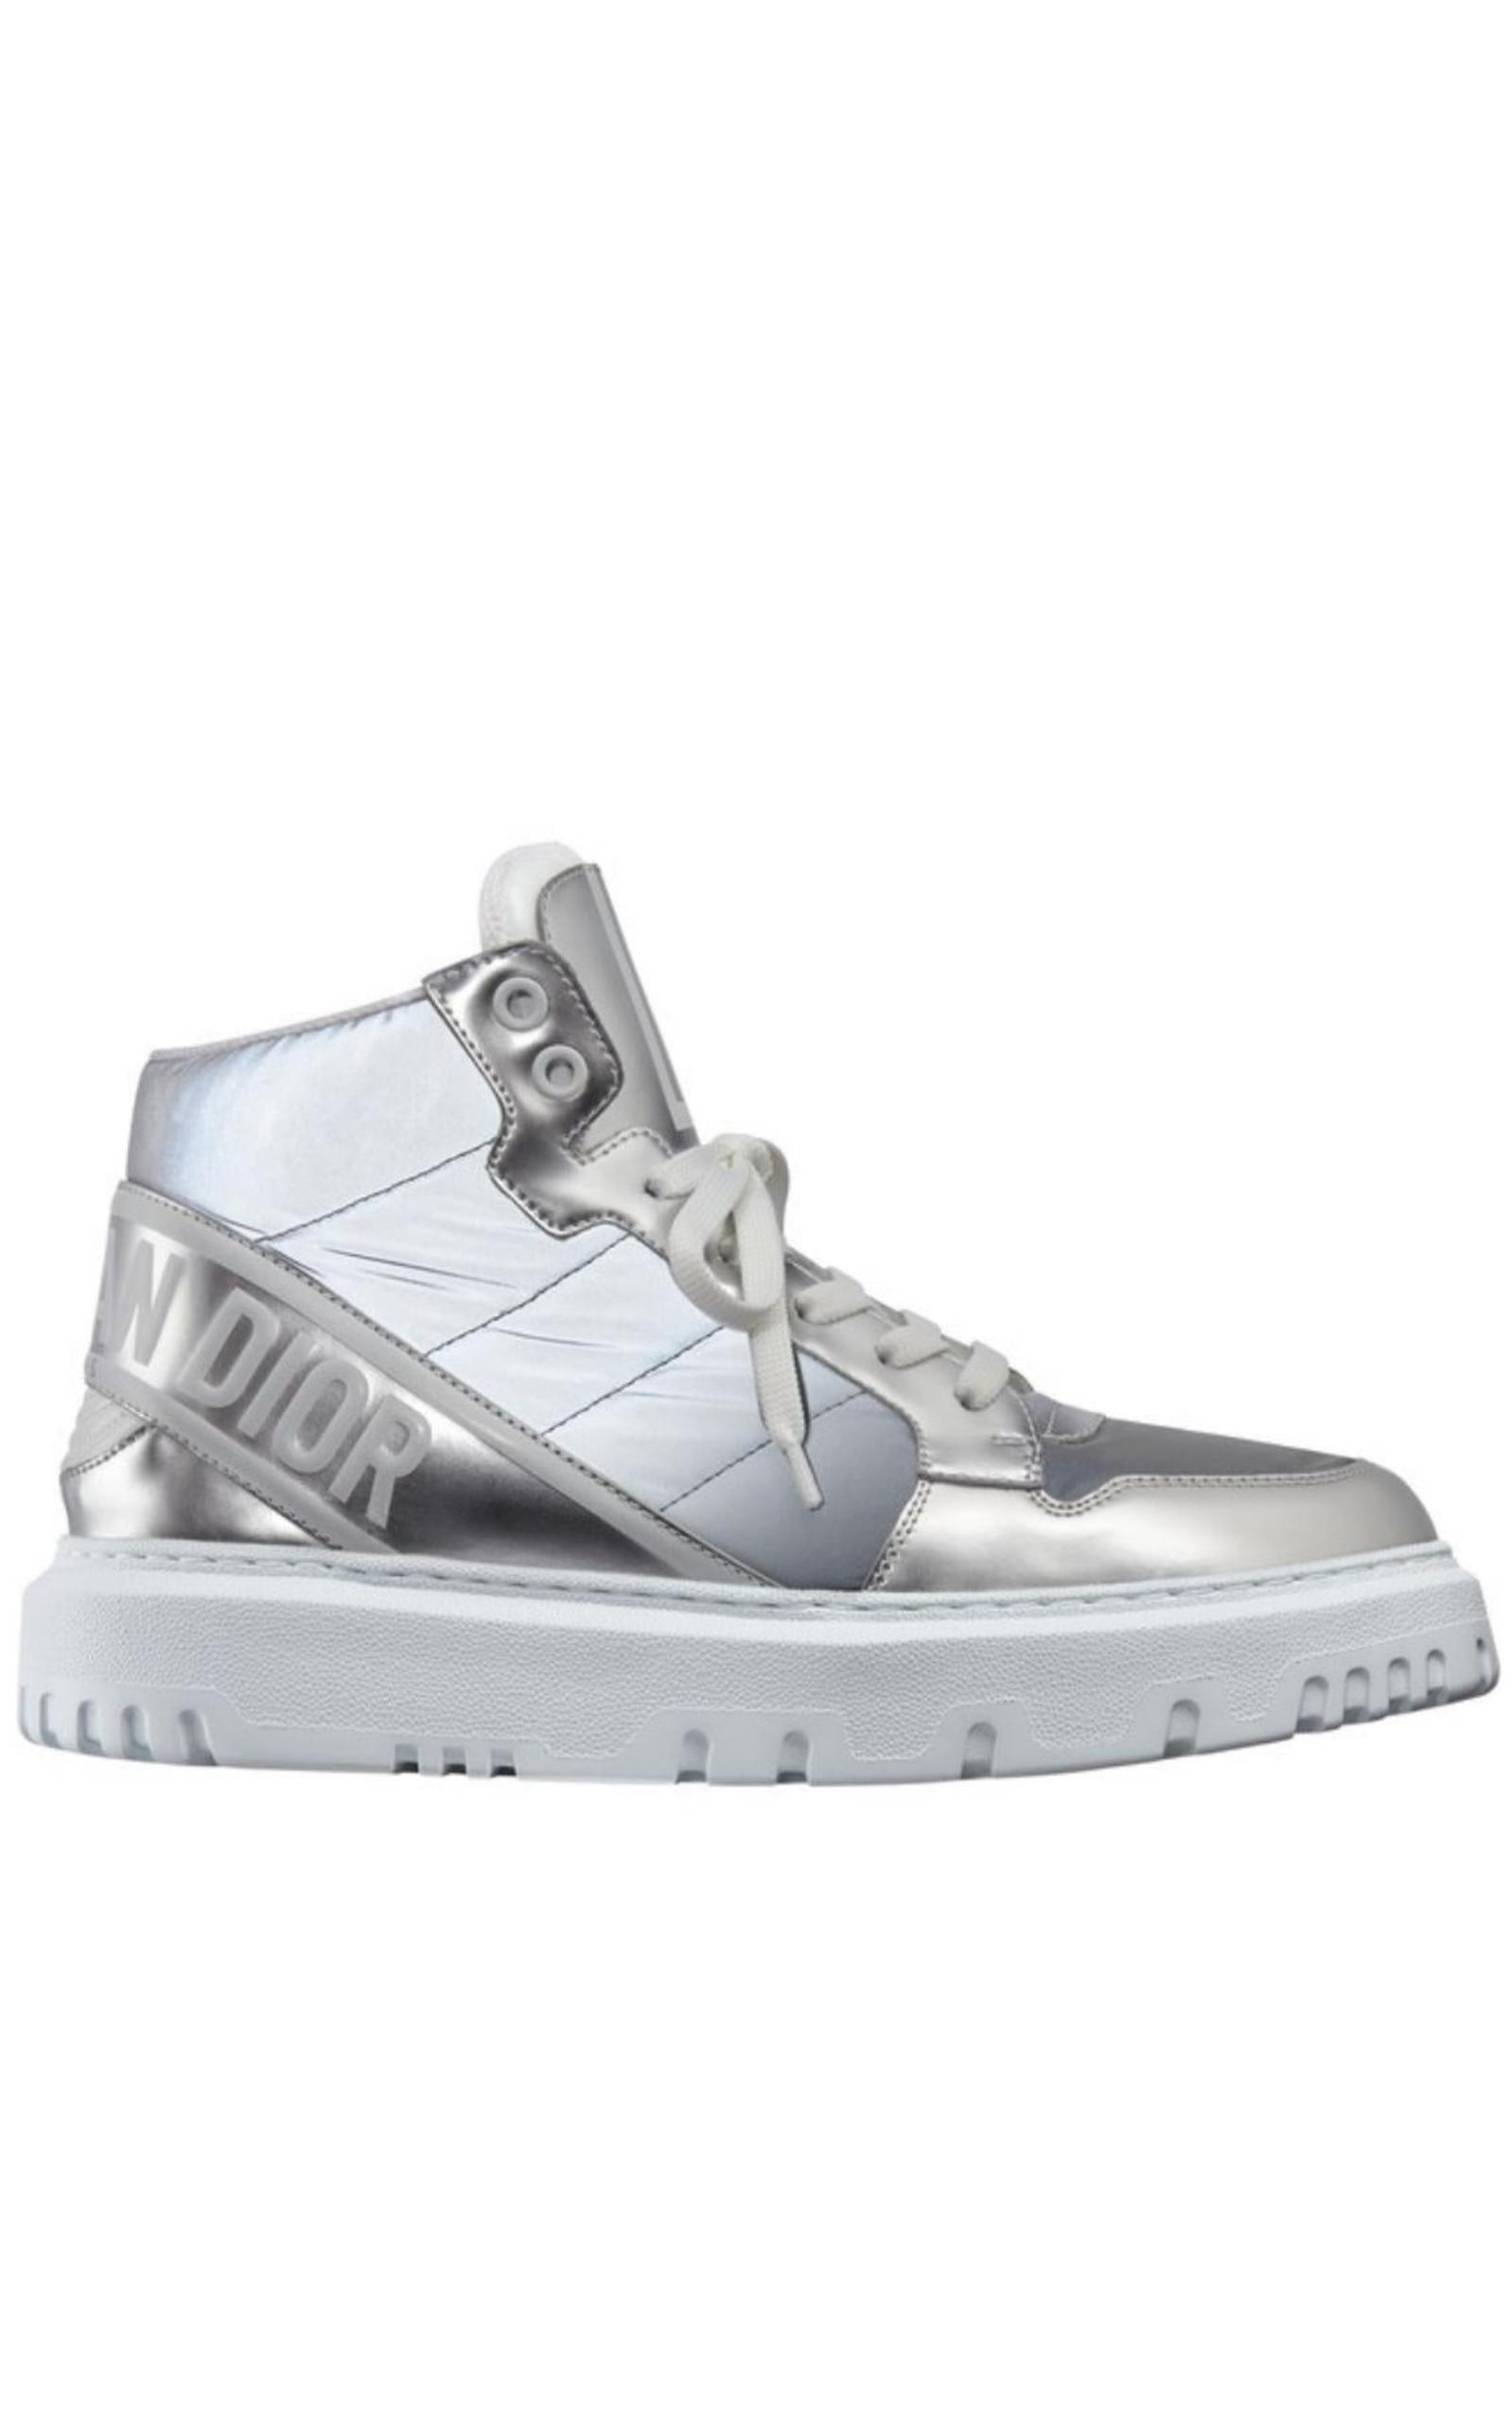 Christian Dior B22 Green/Grey Reflective Trainer Sneaker